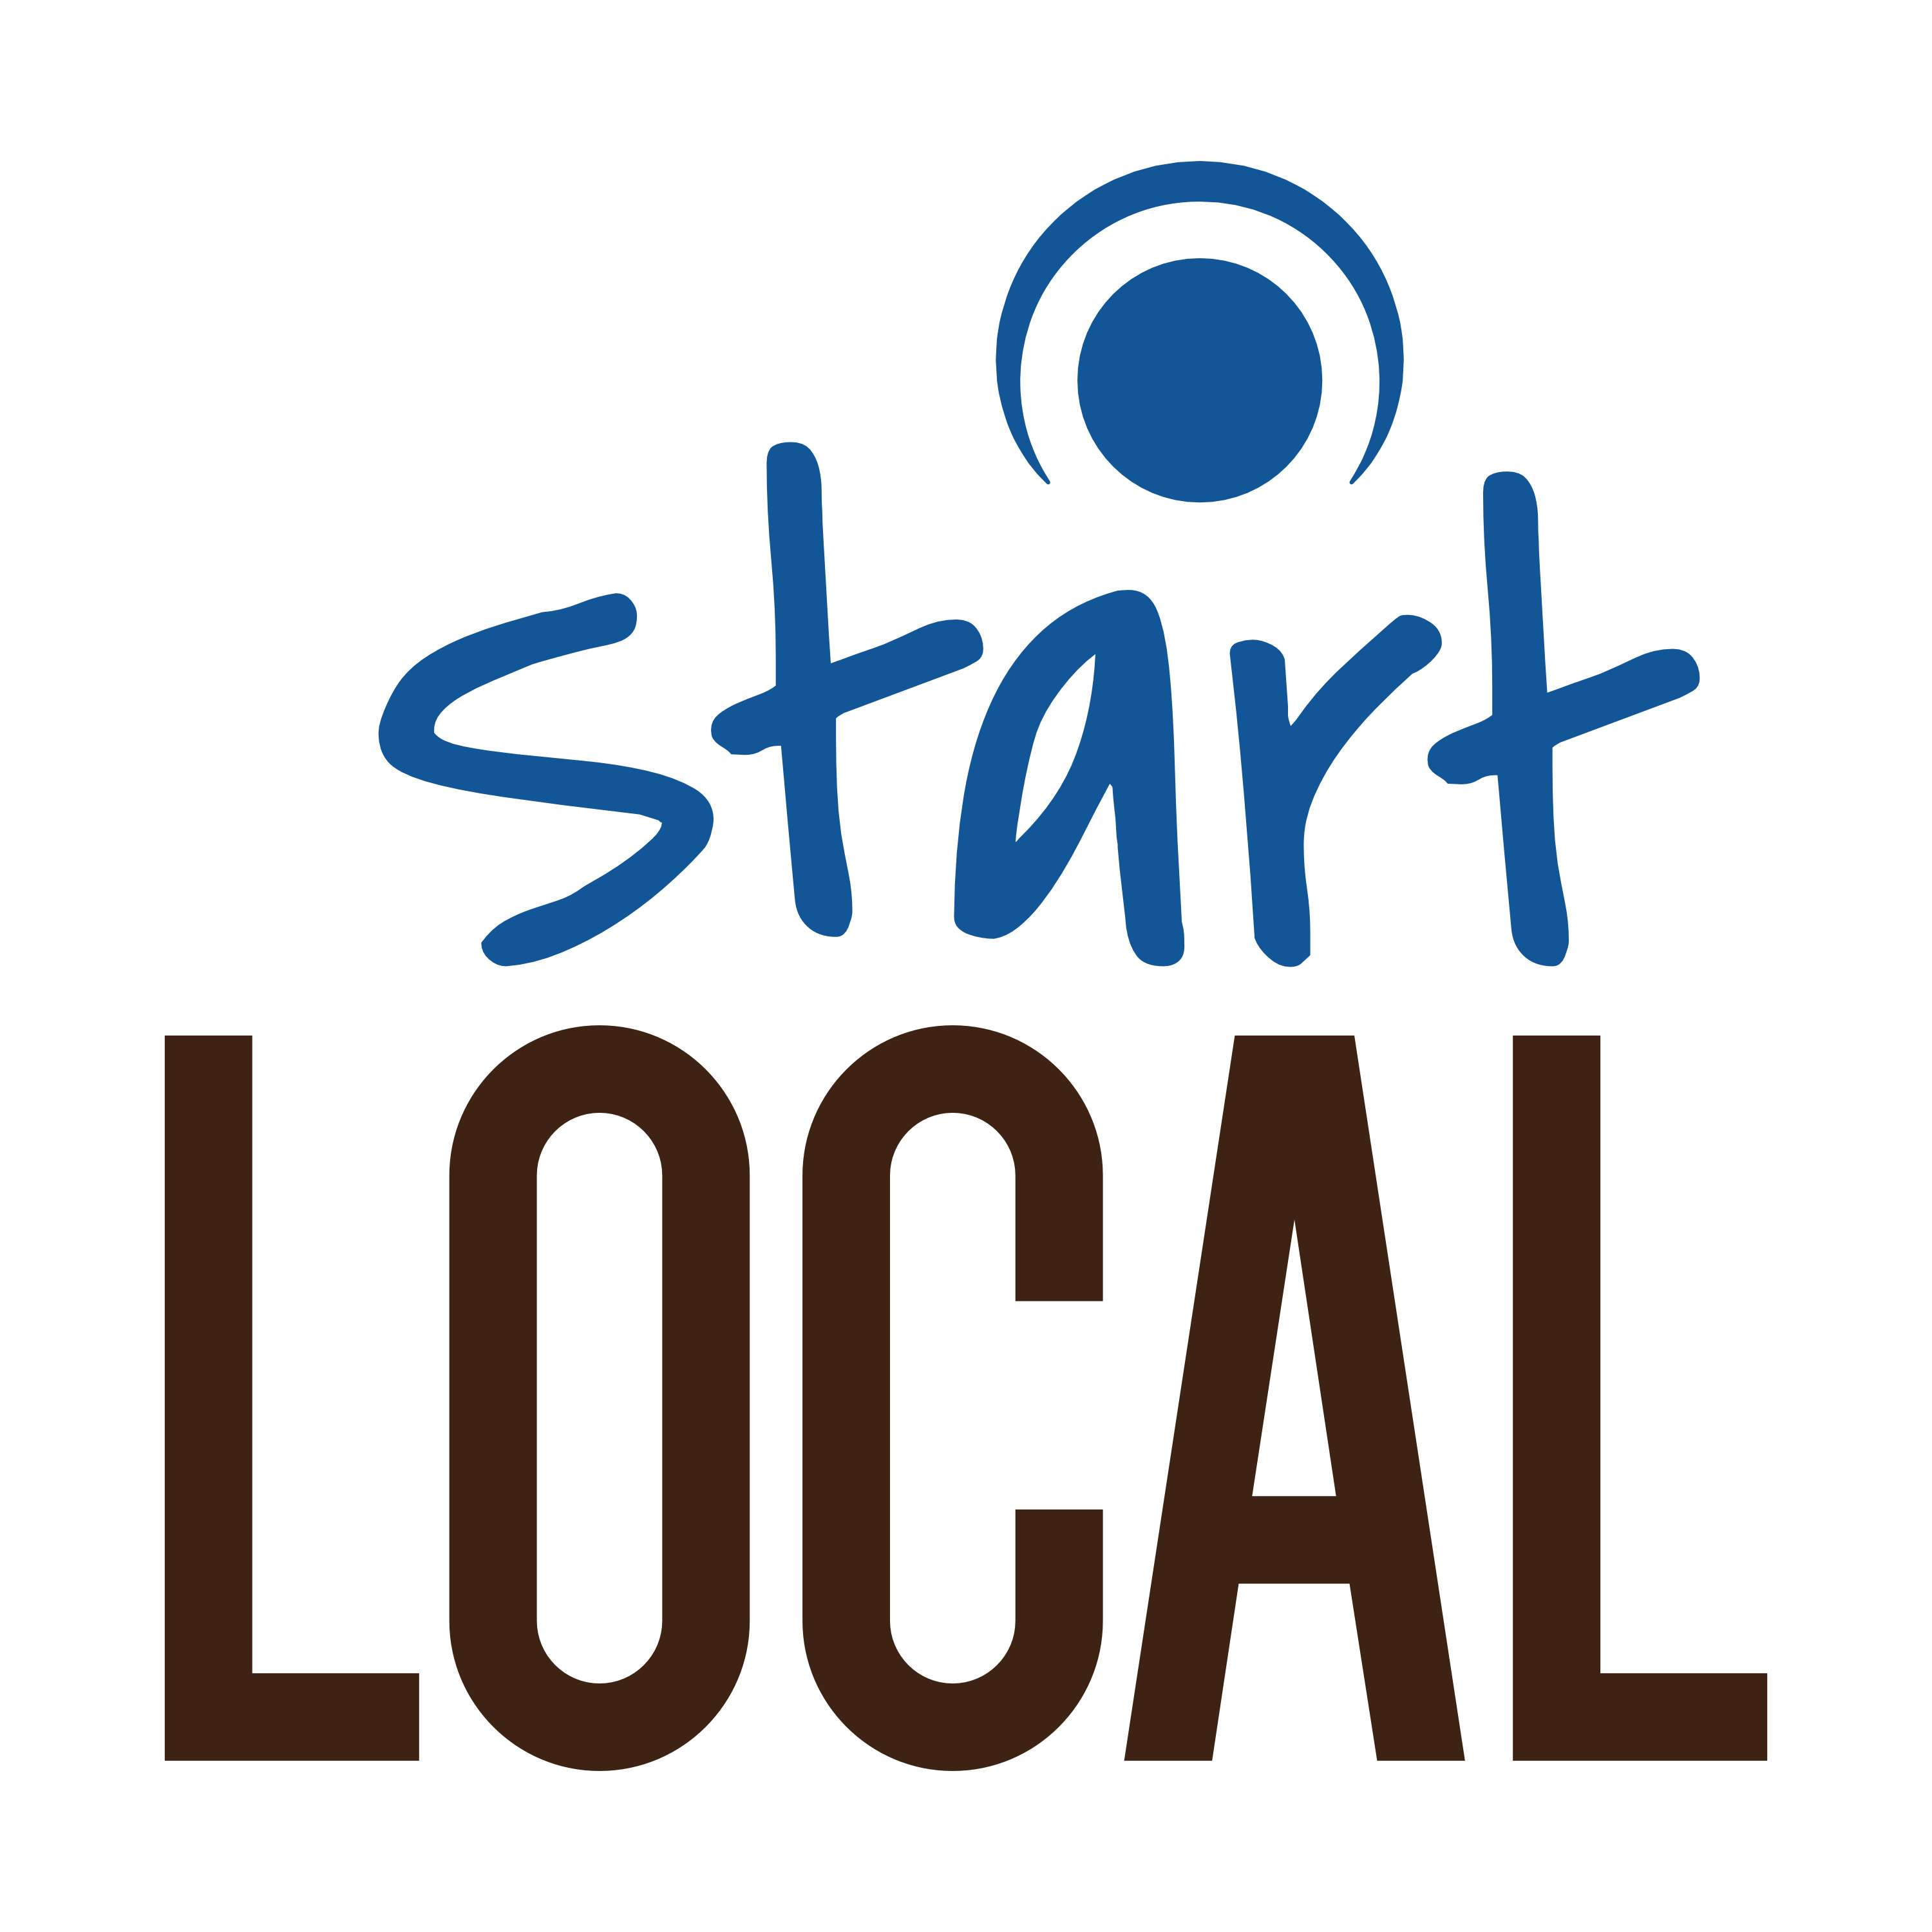 Start Local